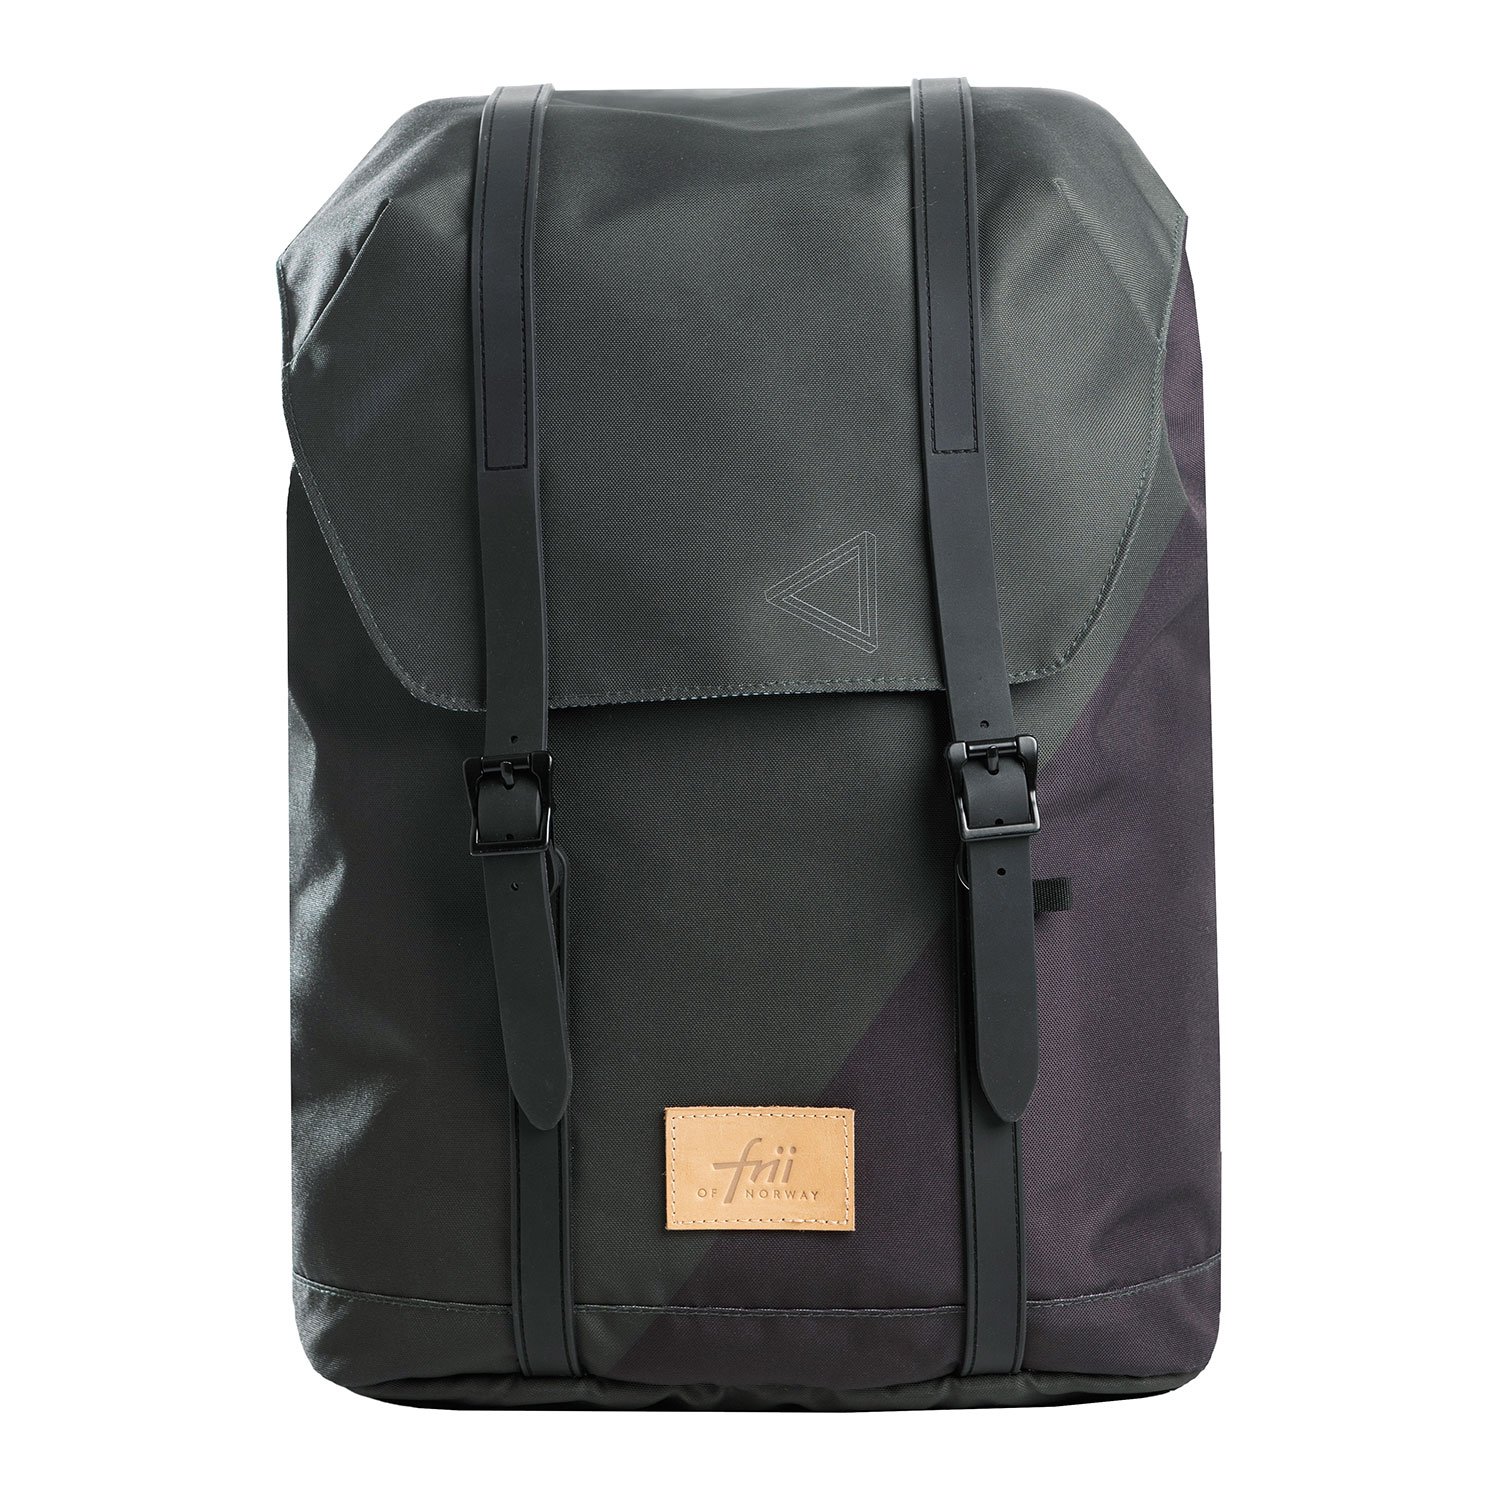 Frii of Norway - School Bag 30 L - Black (20200)